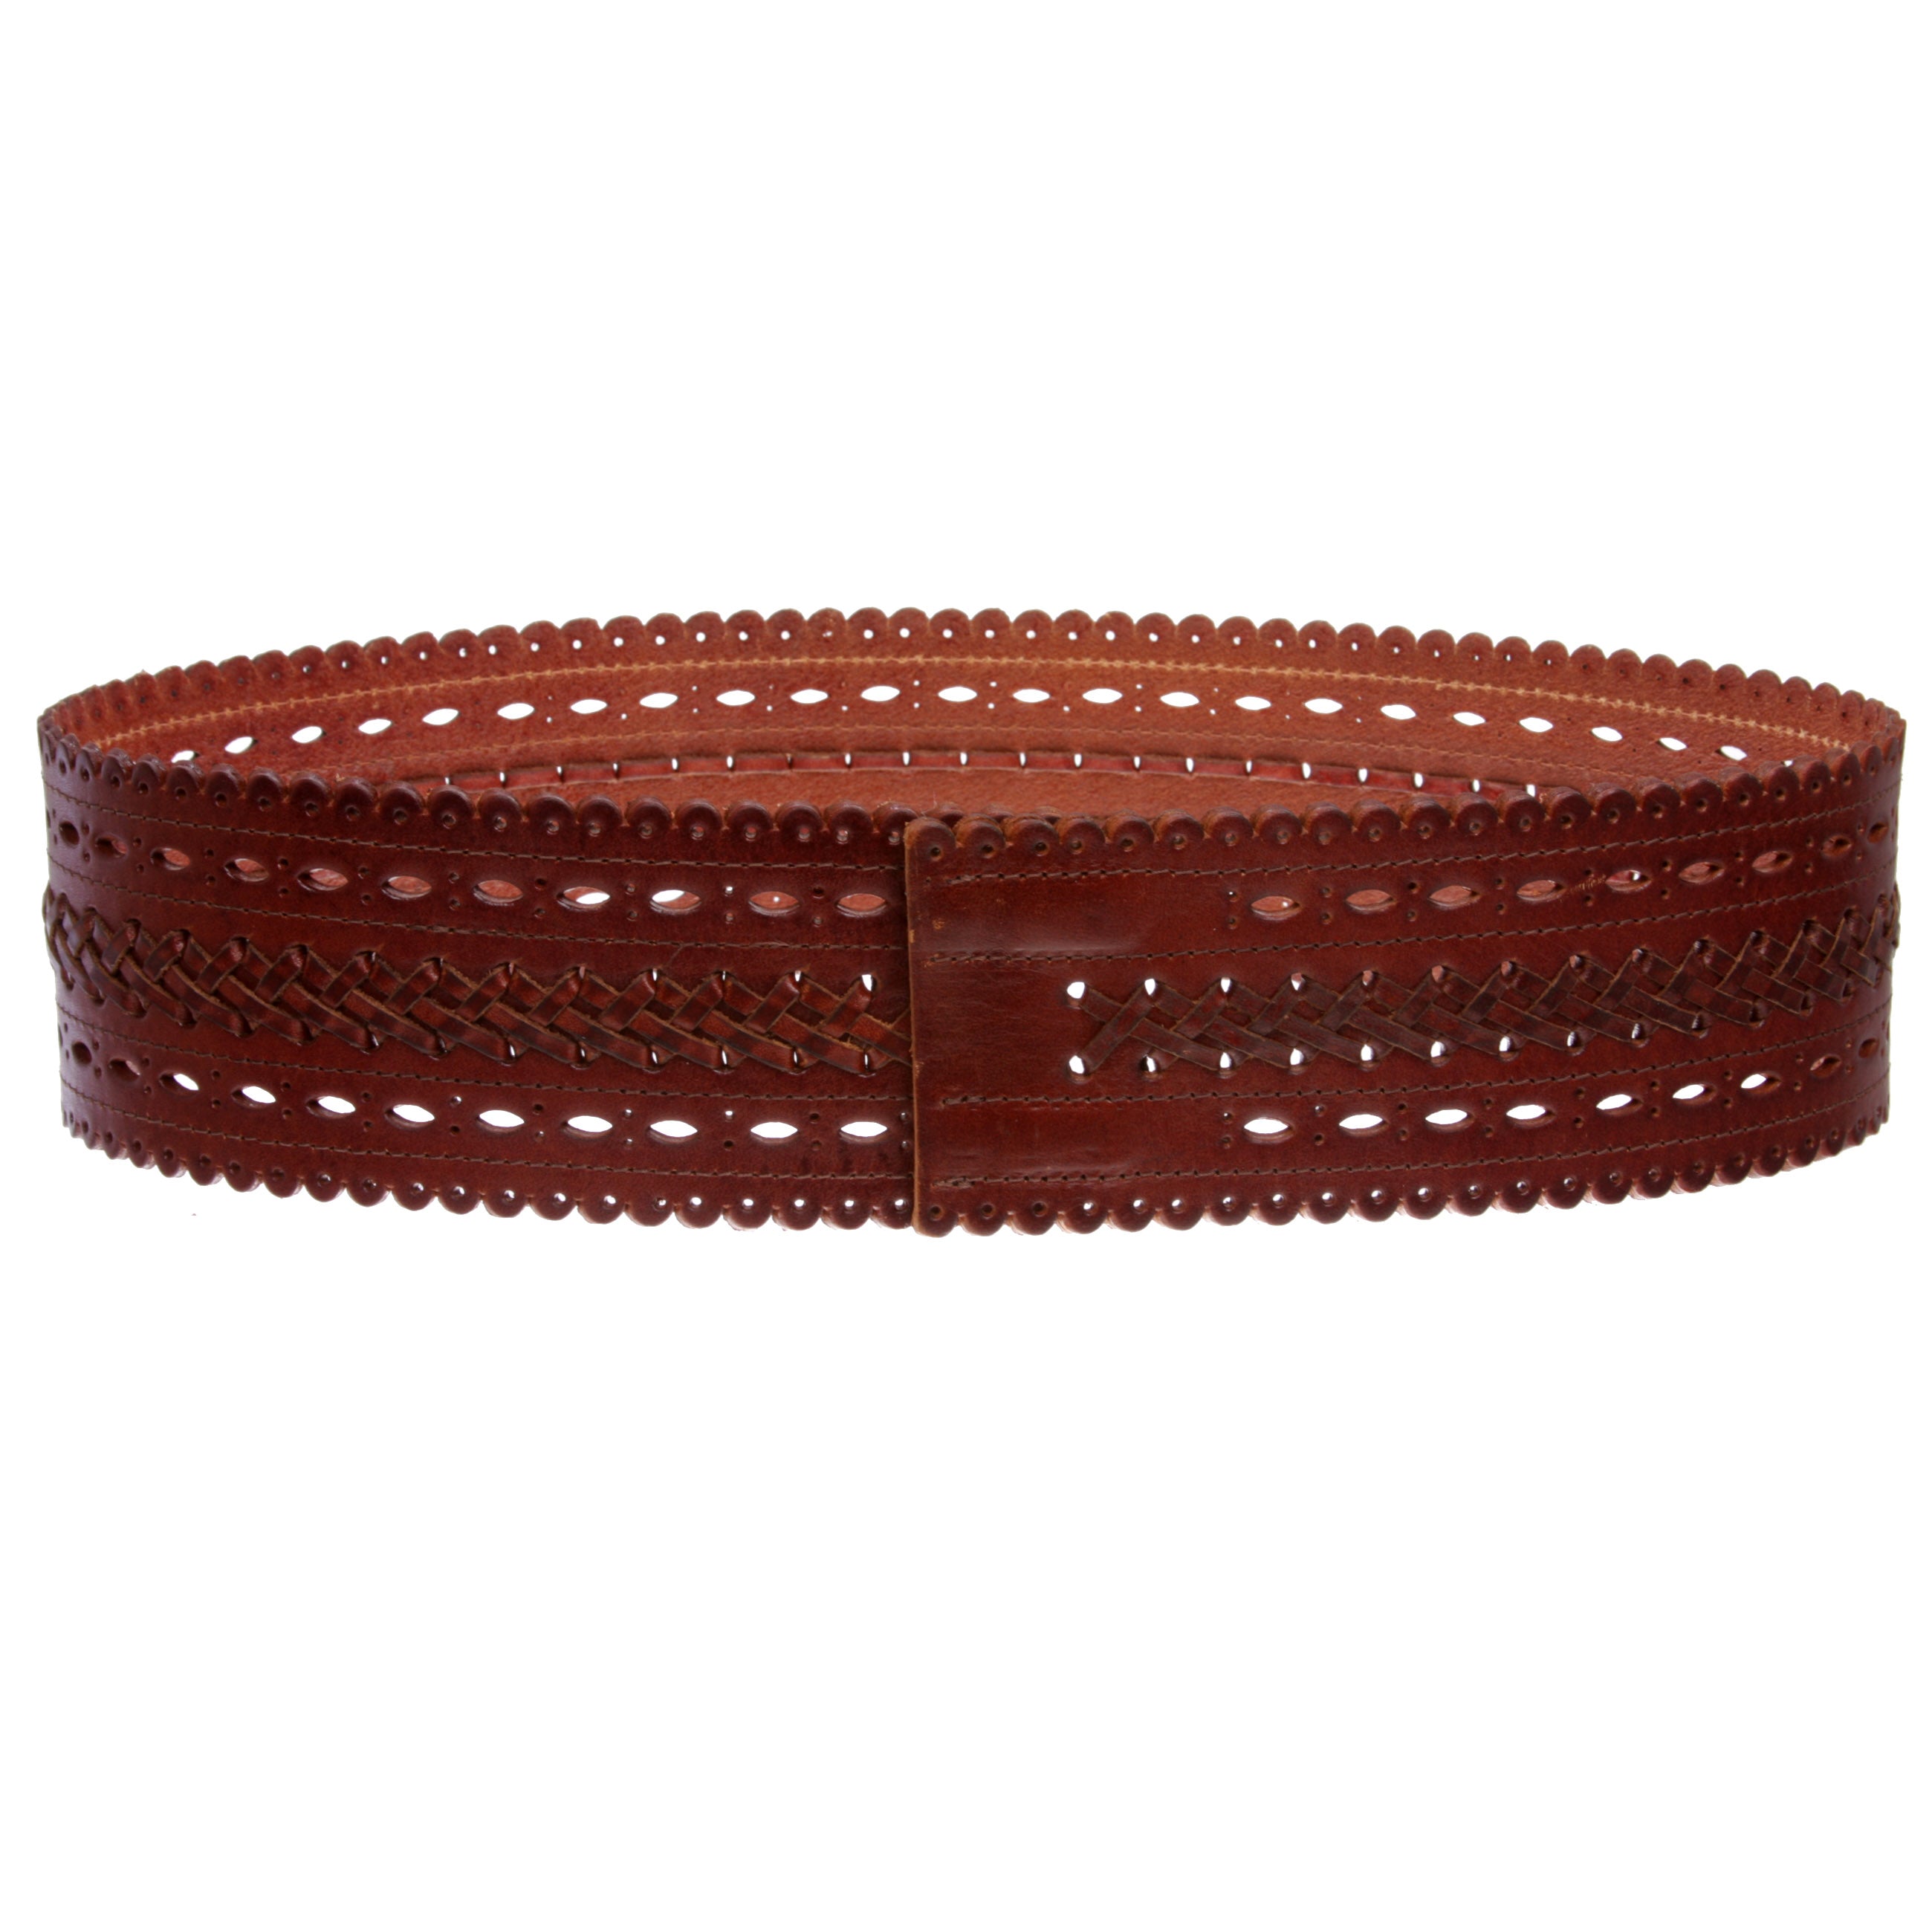 70mm Leather Waist Belt